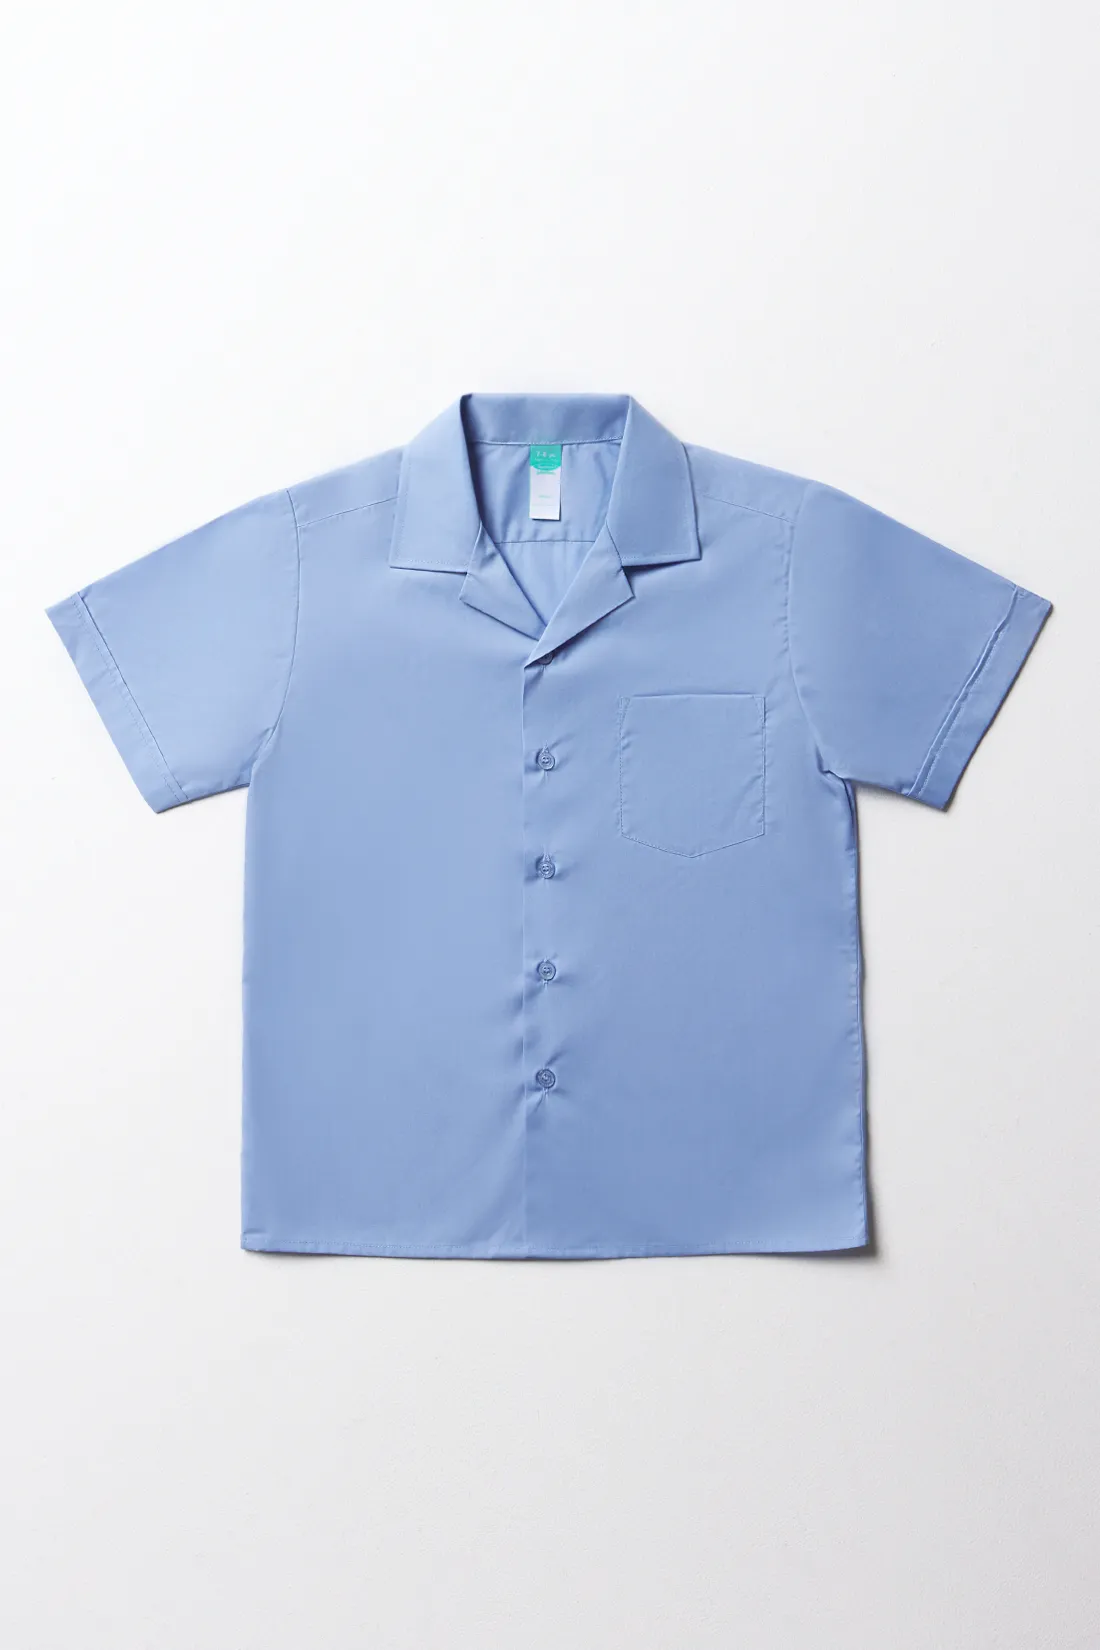 Unisex short sleeve open neck shirt mid blue - Kids's School Clothes ...